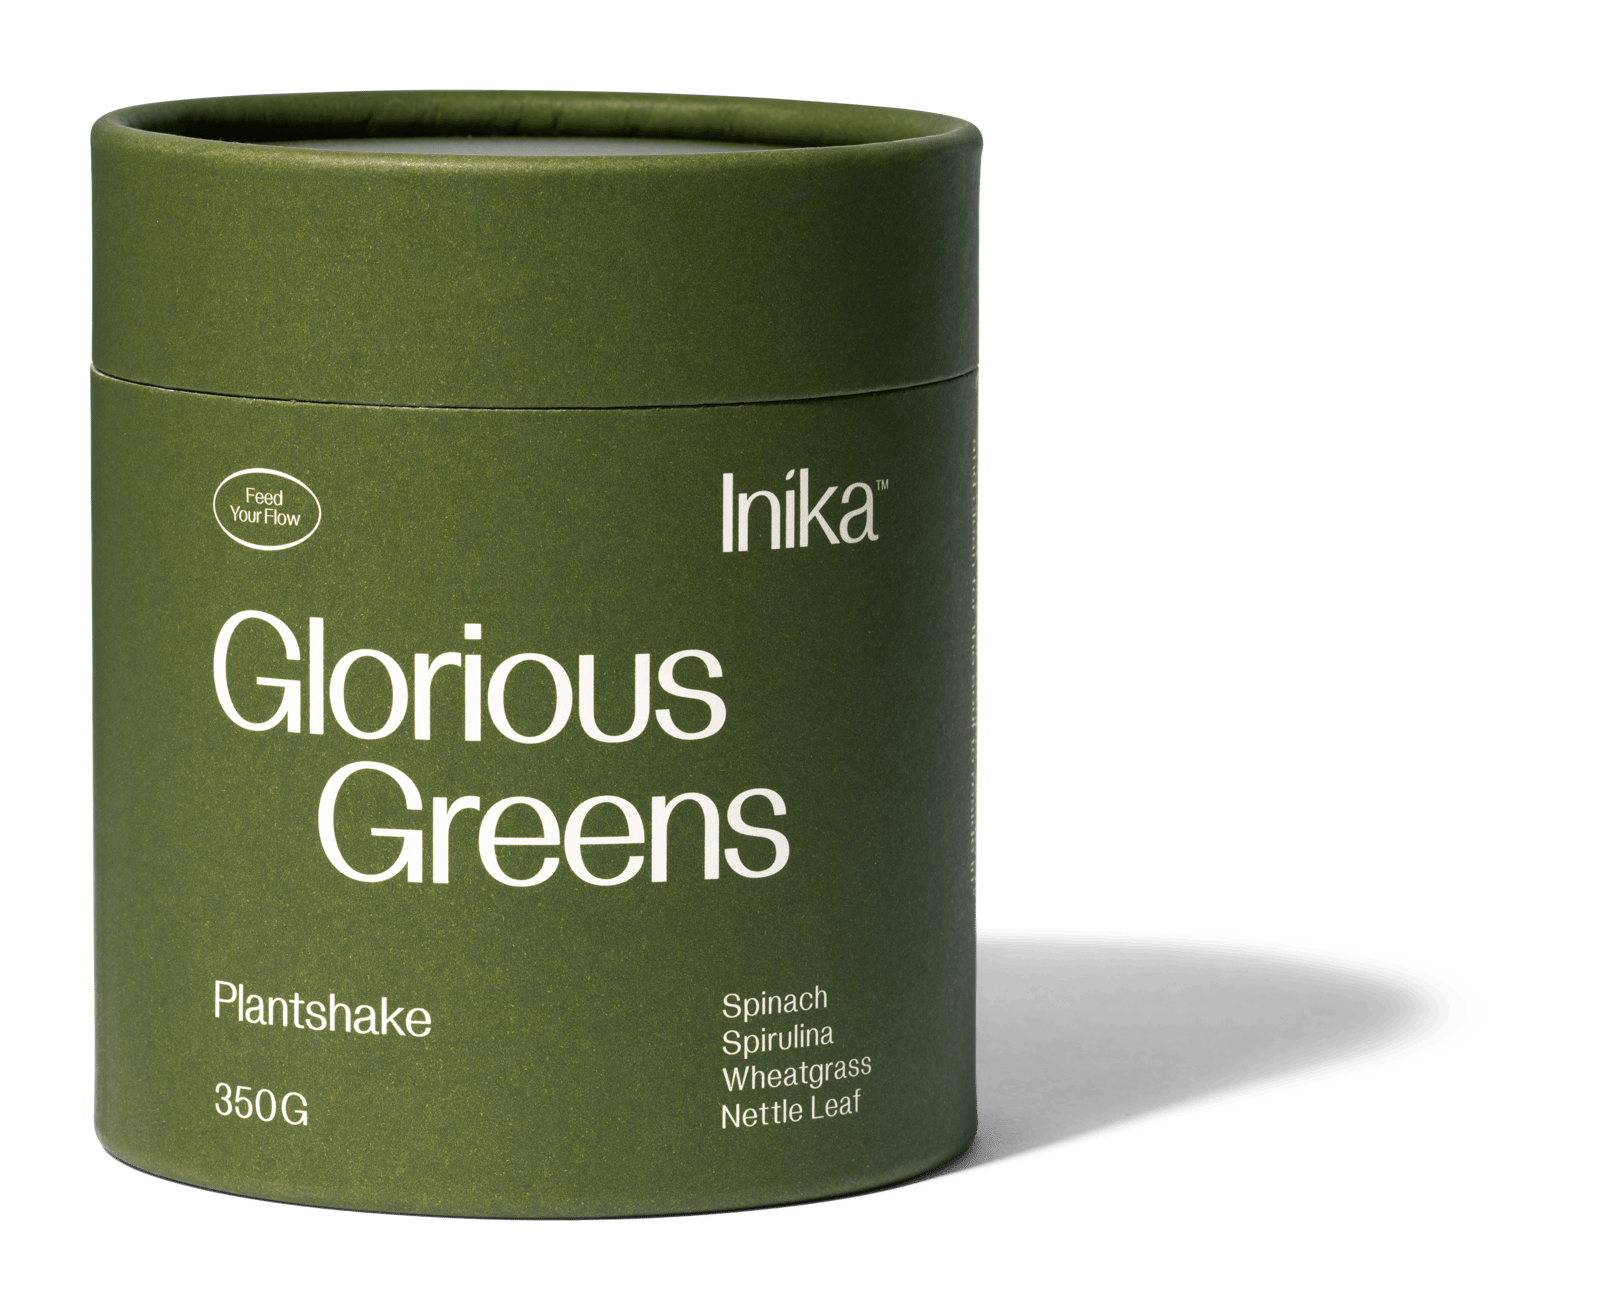 Inika Superfoods Plantshake Glorious Greens 350g